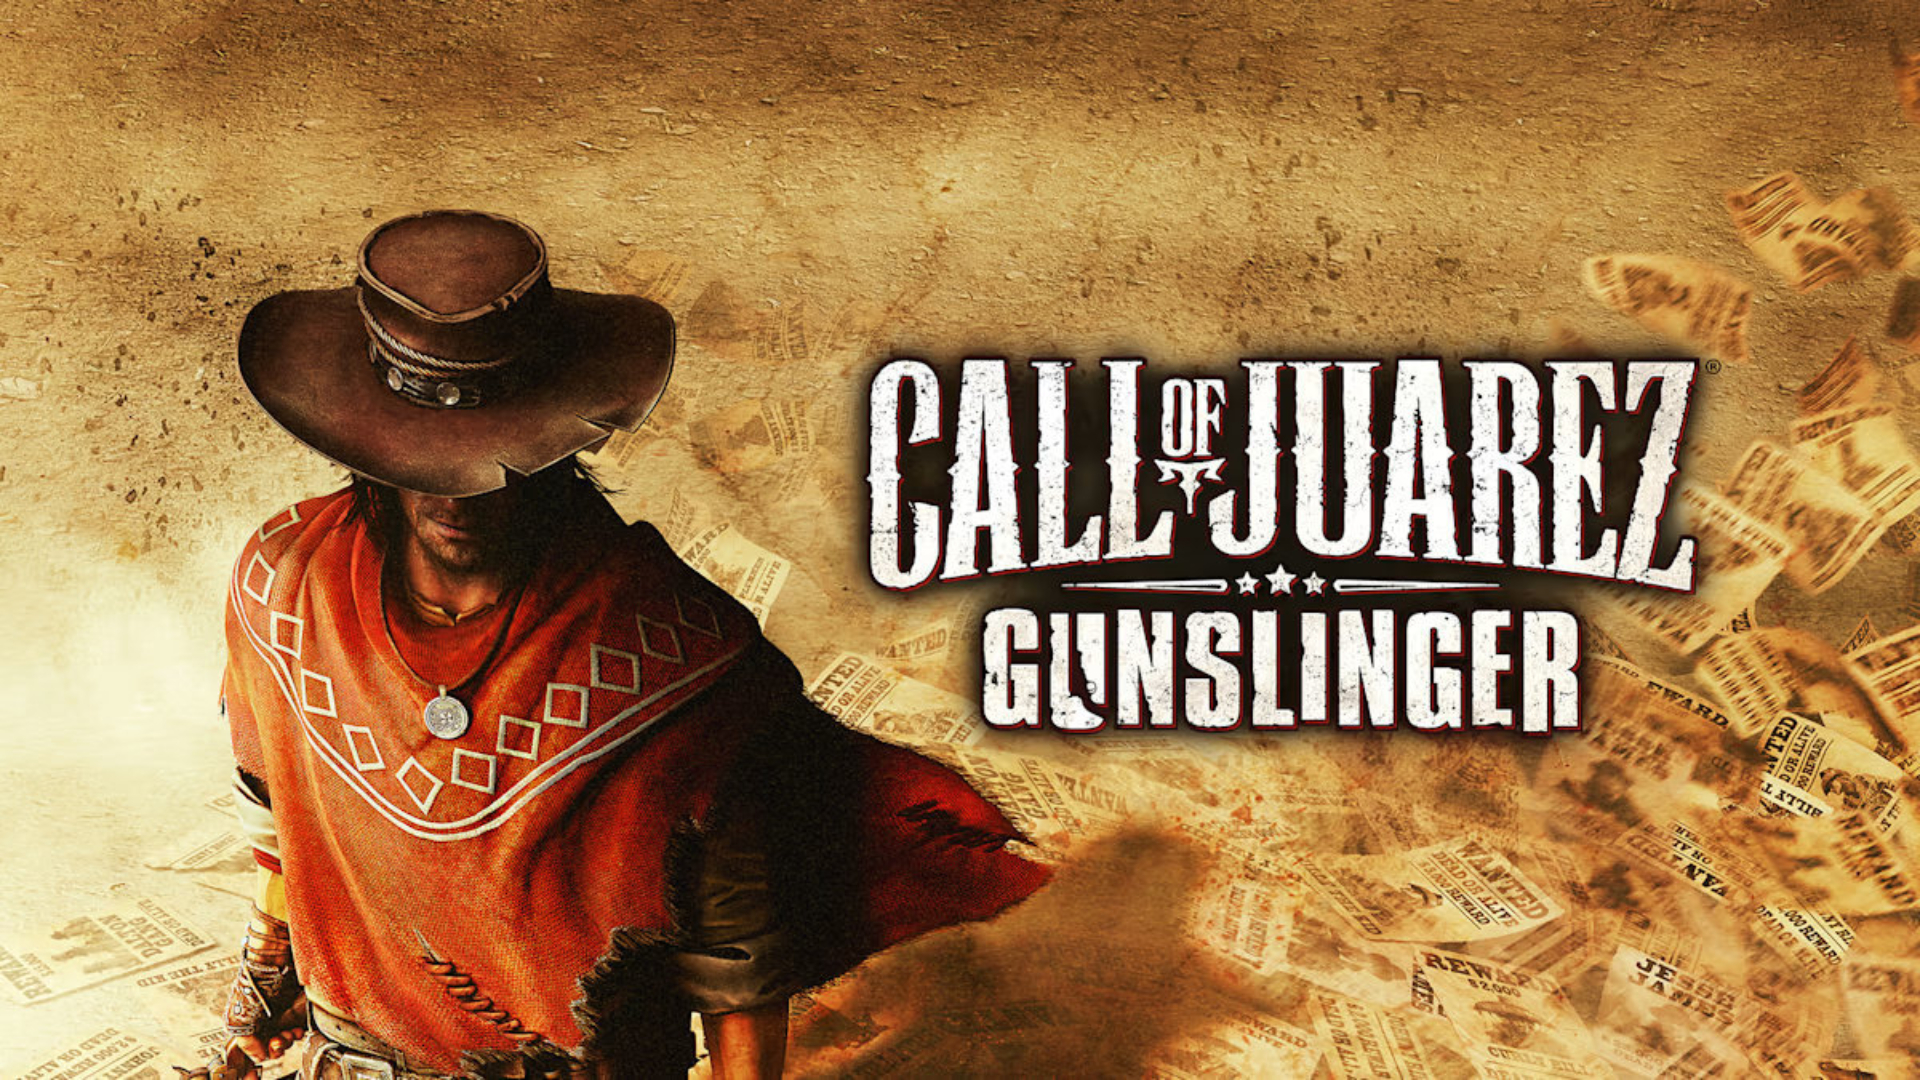 Cowboy games - Call of Juarez: Gunslinger